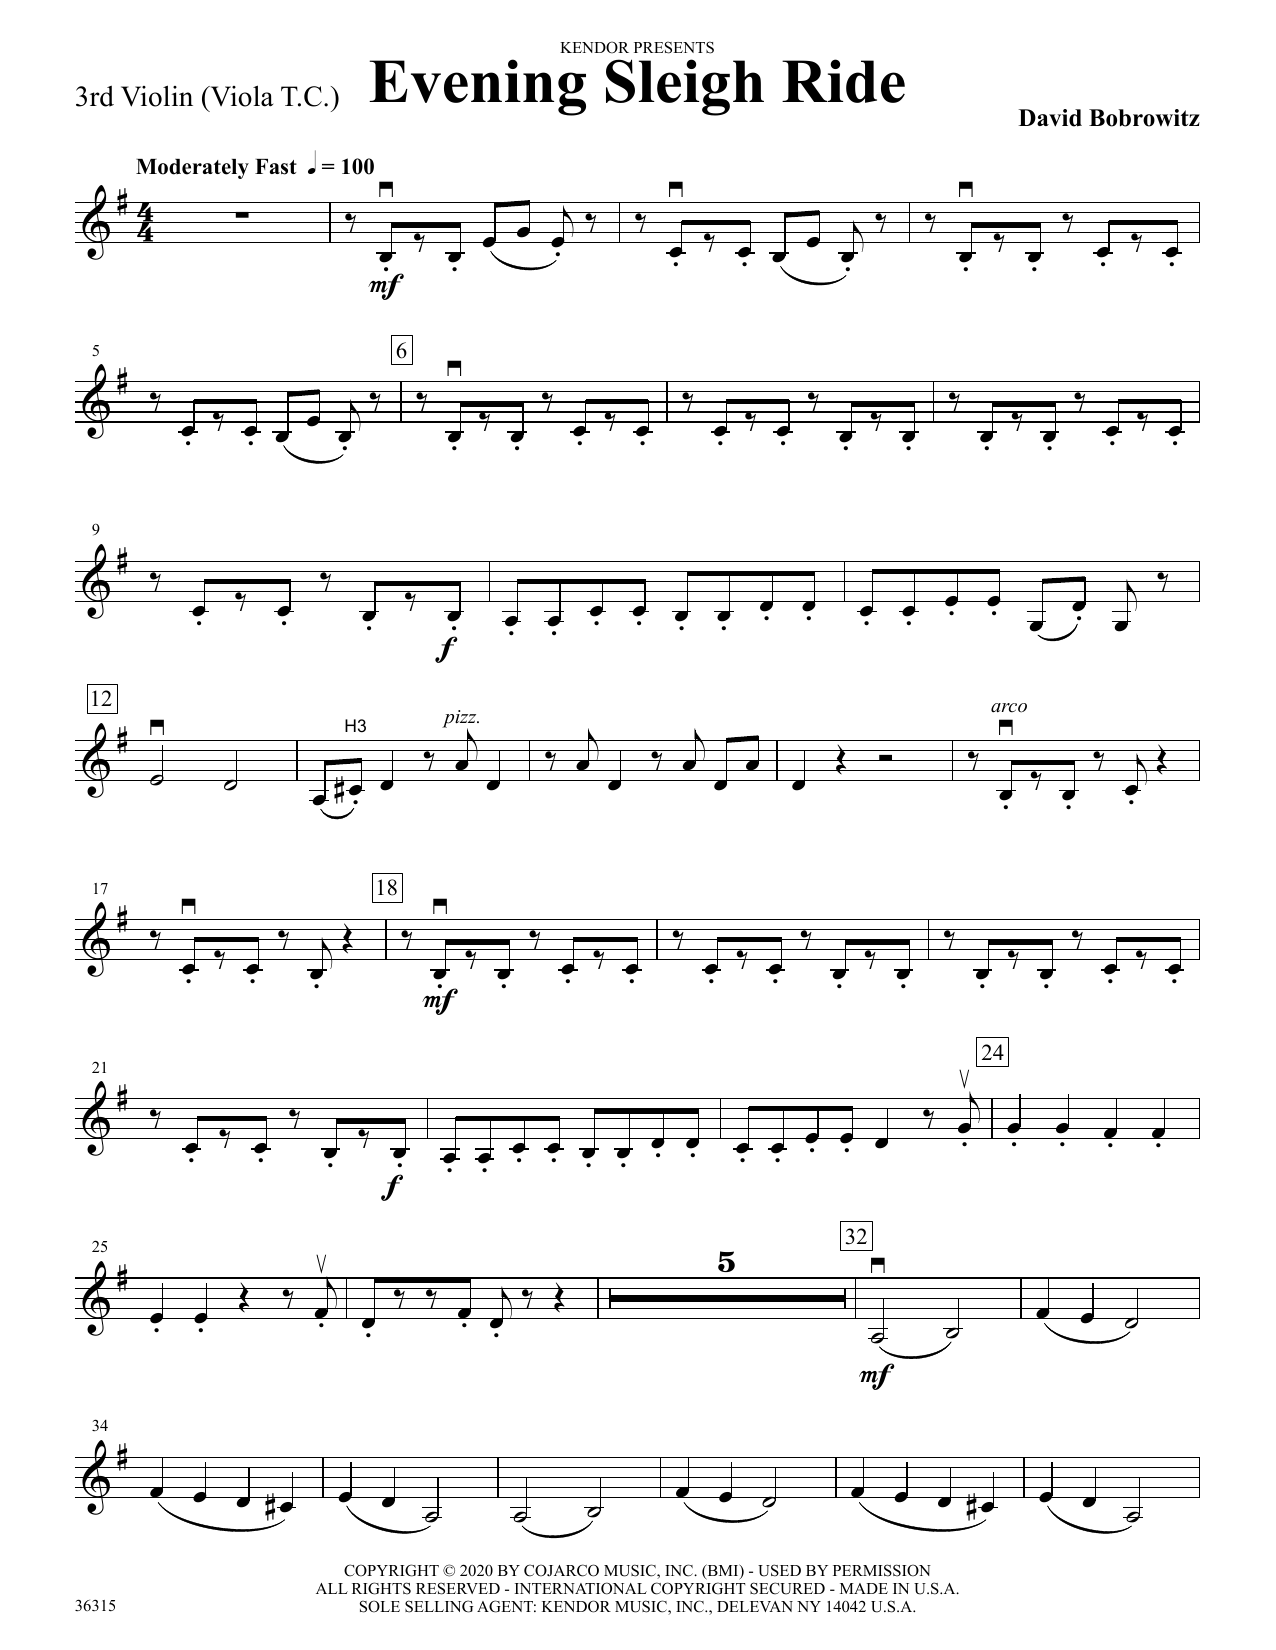 Download David Bobrowitz Evening Sleigh Ride - 3rd Violin Sheet Music